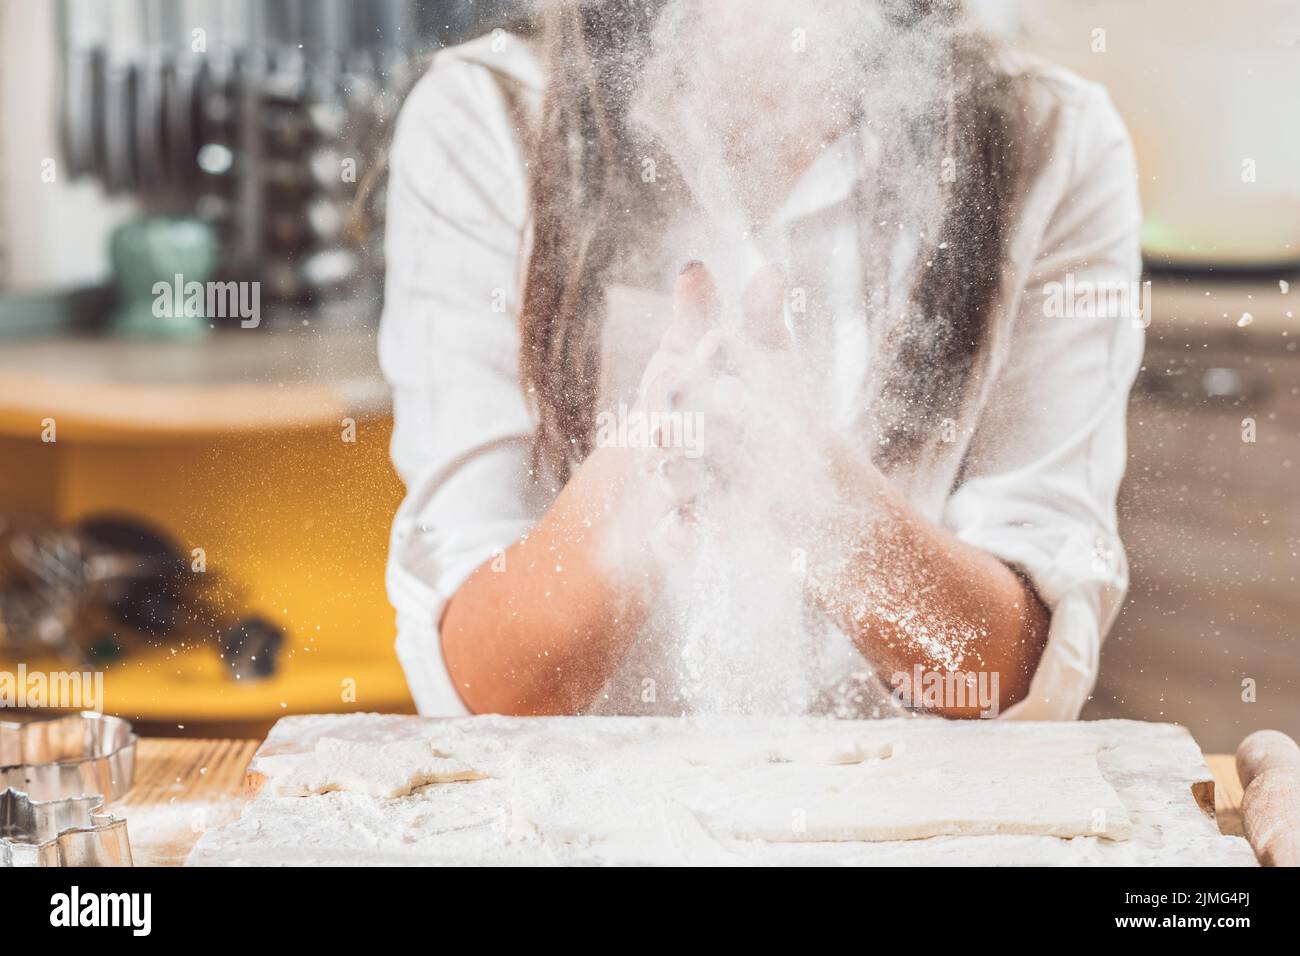 woman clapping hands flour splatter baking leisure Stock Photo